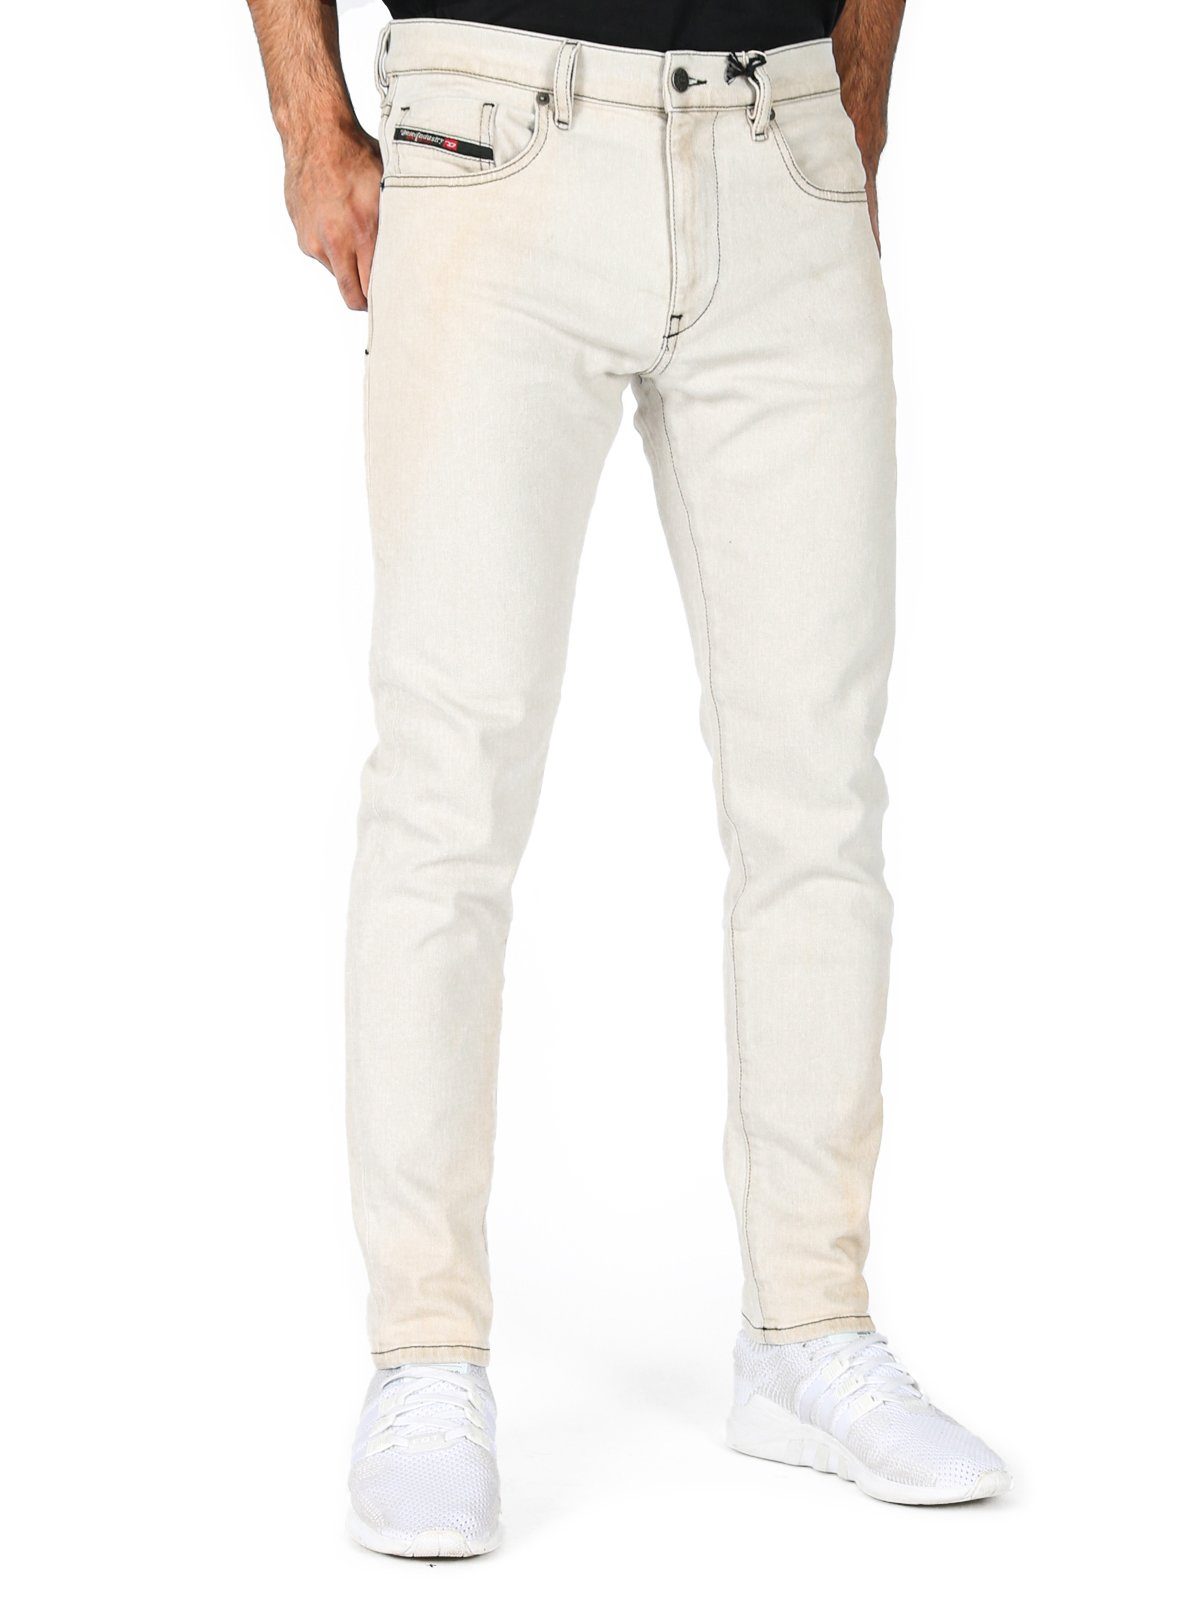 Store-Einführung Diesel Slim-fit-Jeans Creme D-Strukt-SP20 - Look - Weiß Vintage 09A52